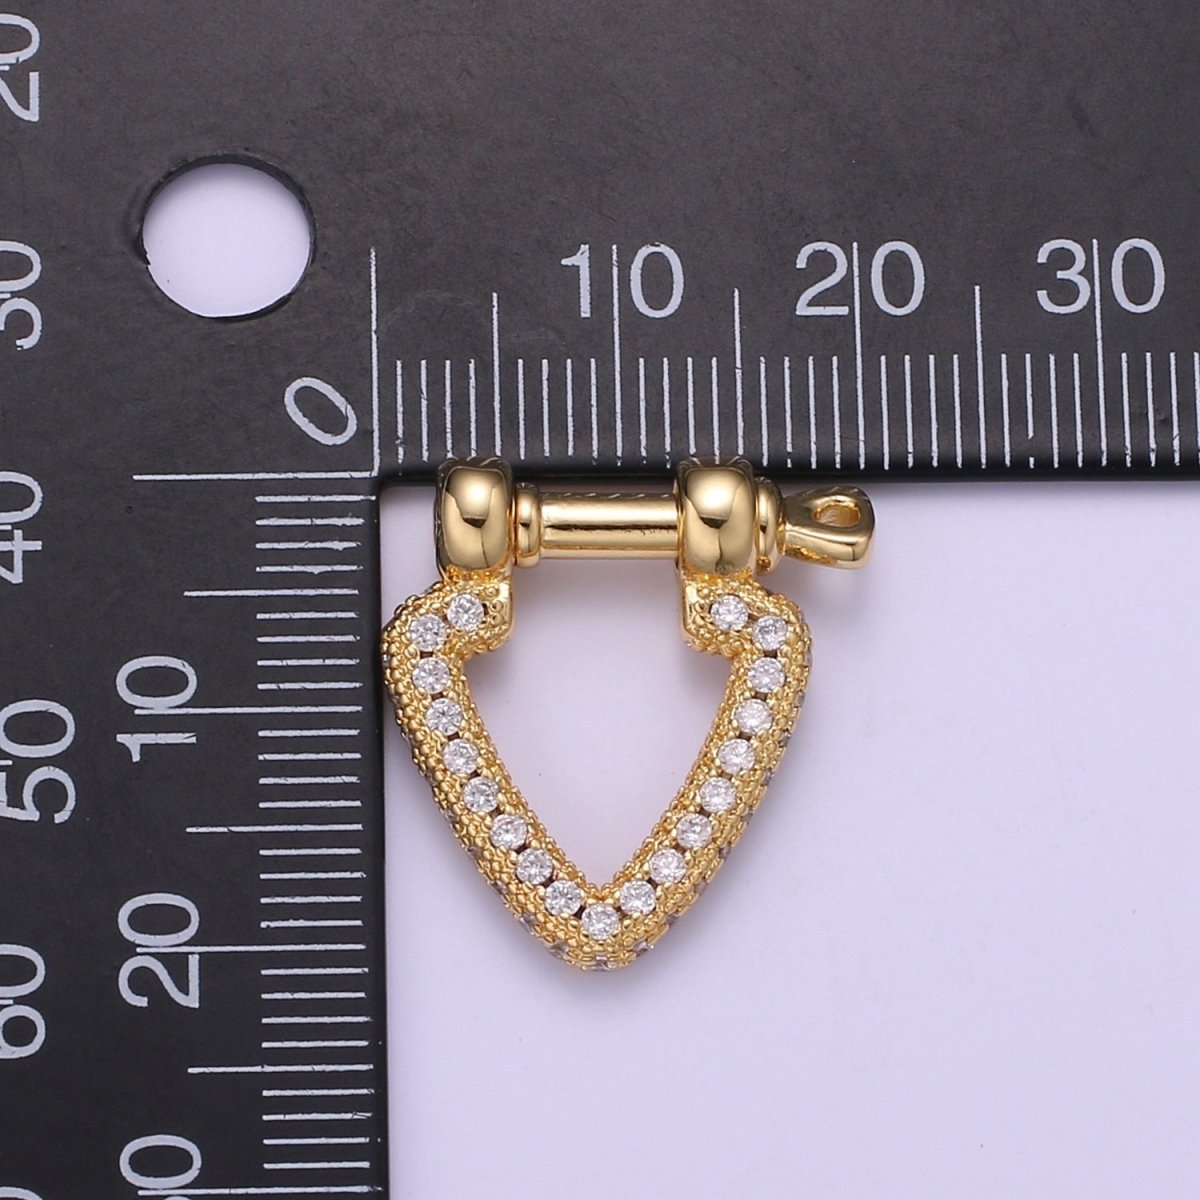 Micor pave Clasp Gold Filled Screw clasp lock, Anchor Shackle, Gold Triangle Cz Bracelet Necklace Clasp Sailor Bracelet Clasp Supply L-260 - DLUXCA